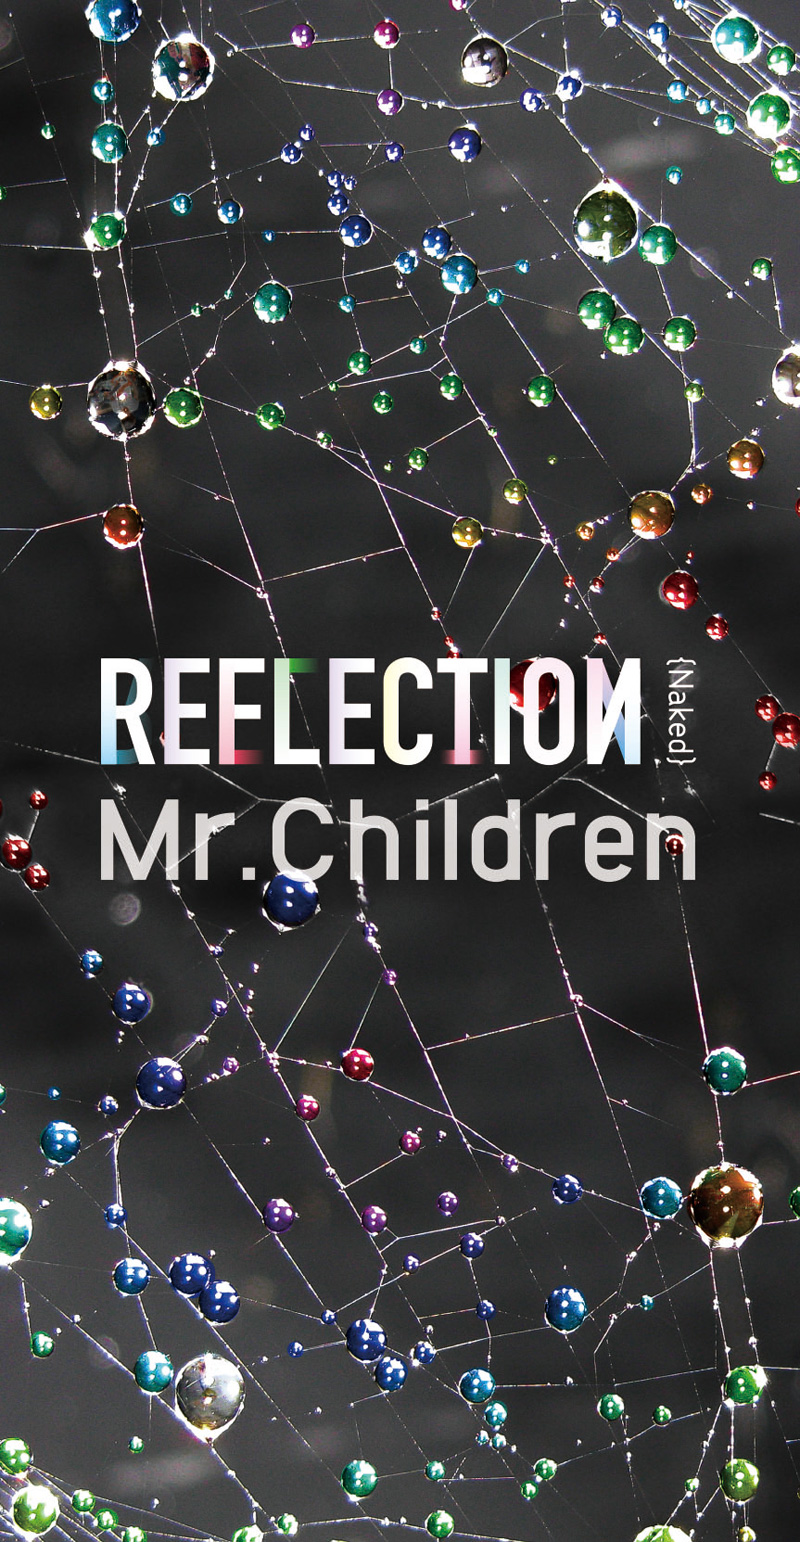 Mr.Childrenの新しい音楽の可能性を探求し続けたNEW ALBUM「REFLECTION」完成！2形態で発表サムネイル画像